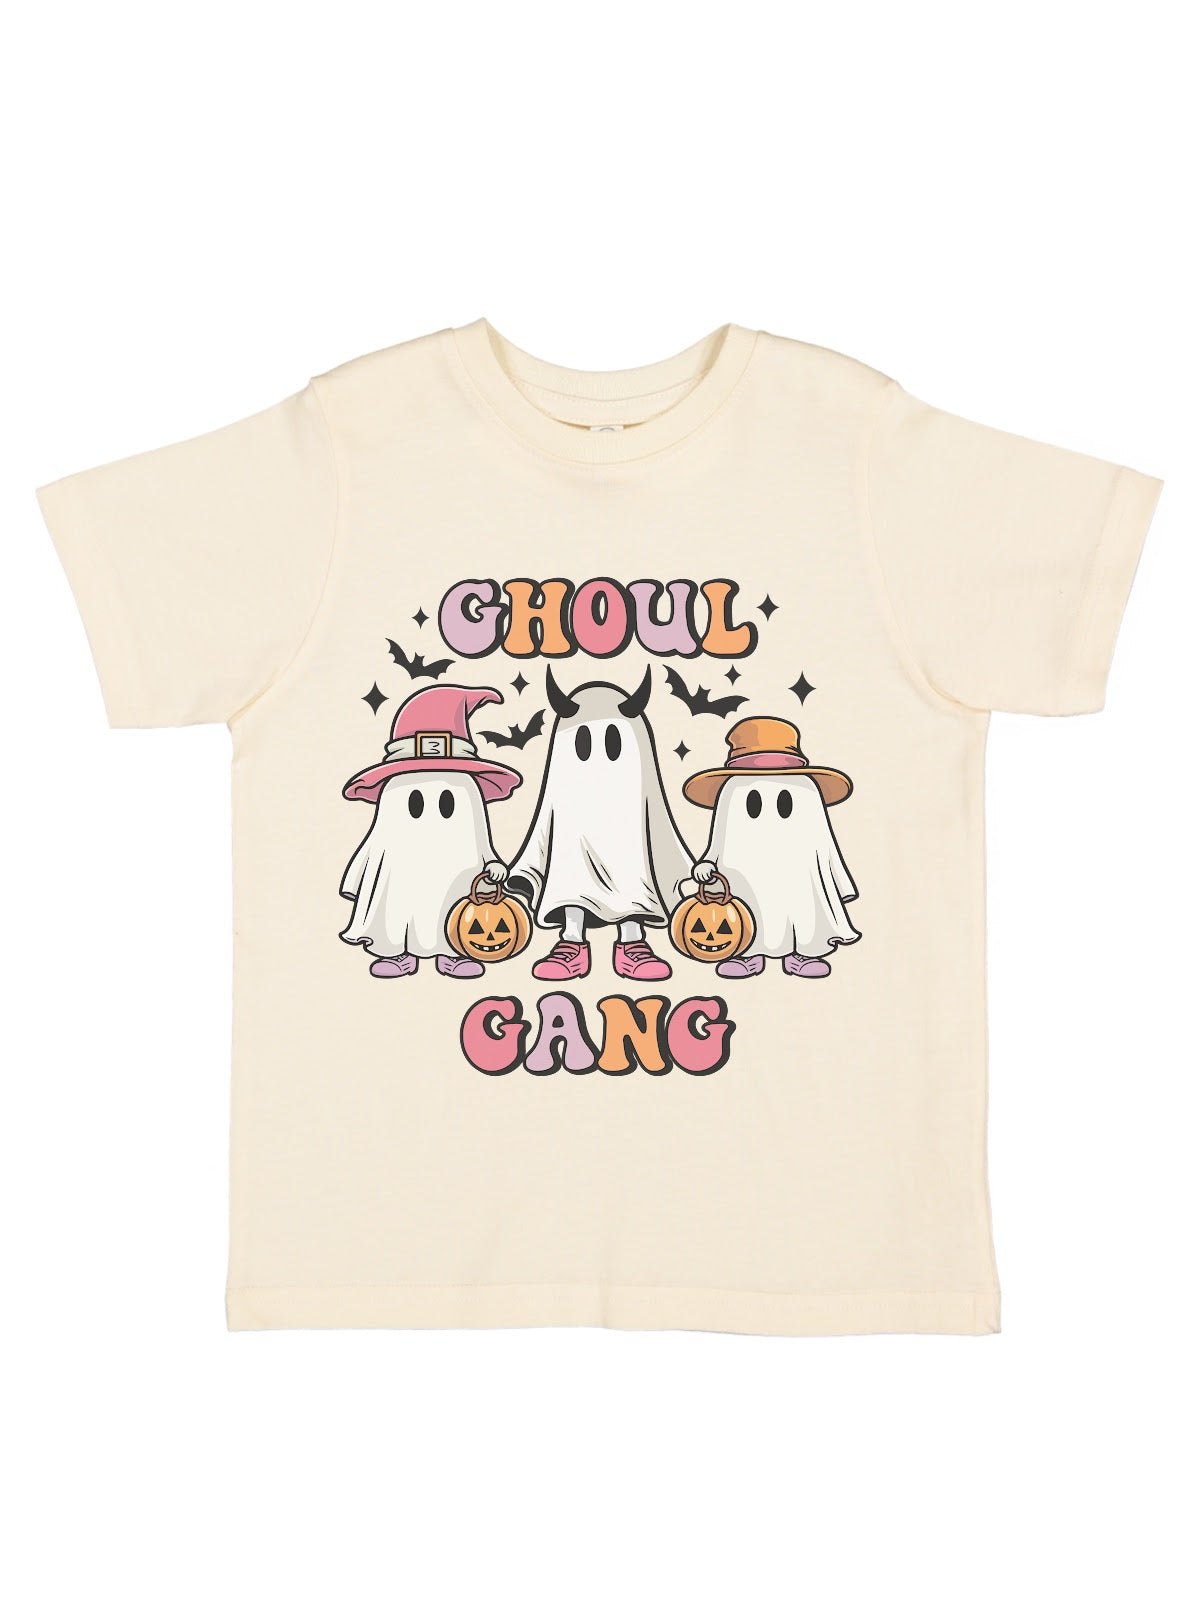 Ghoul Gang Kids Ghosts Halloween Shirt